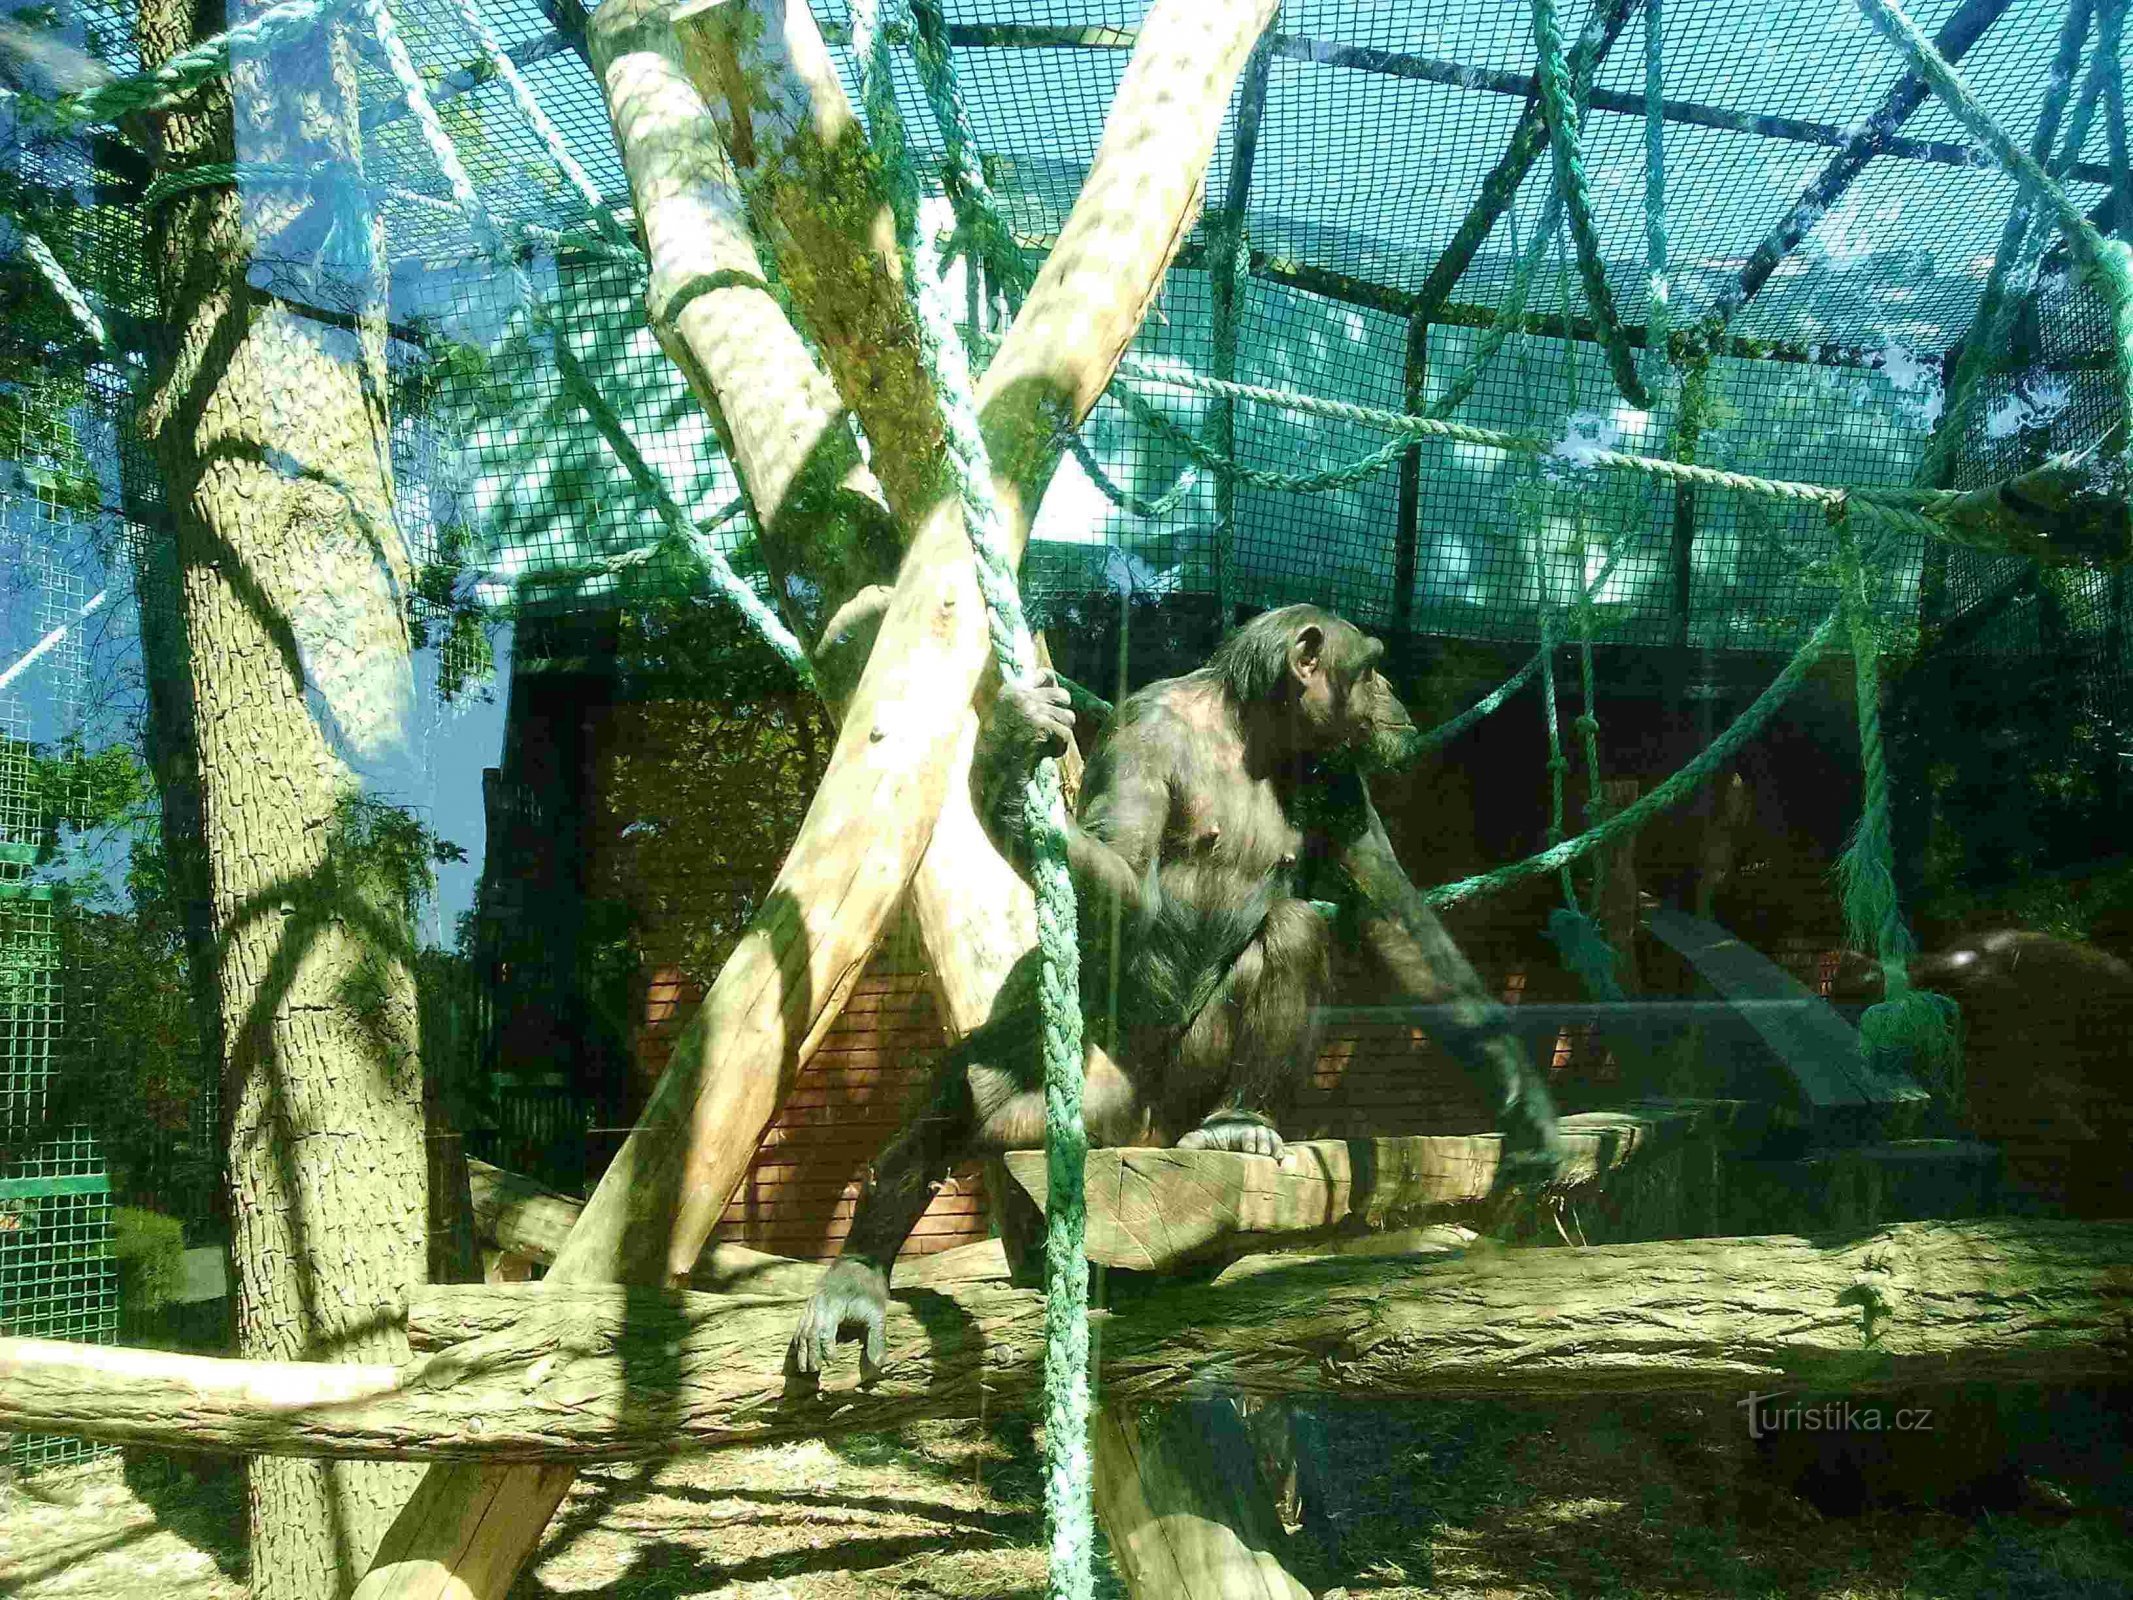 Zoo Hodonin